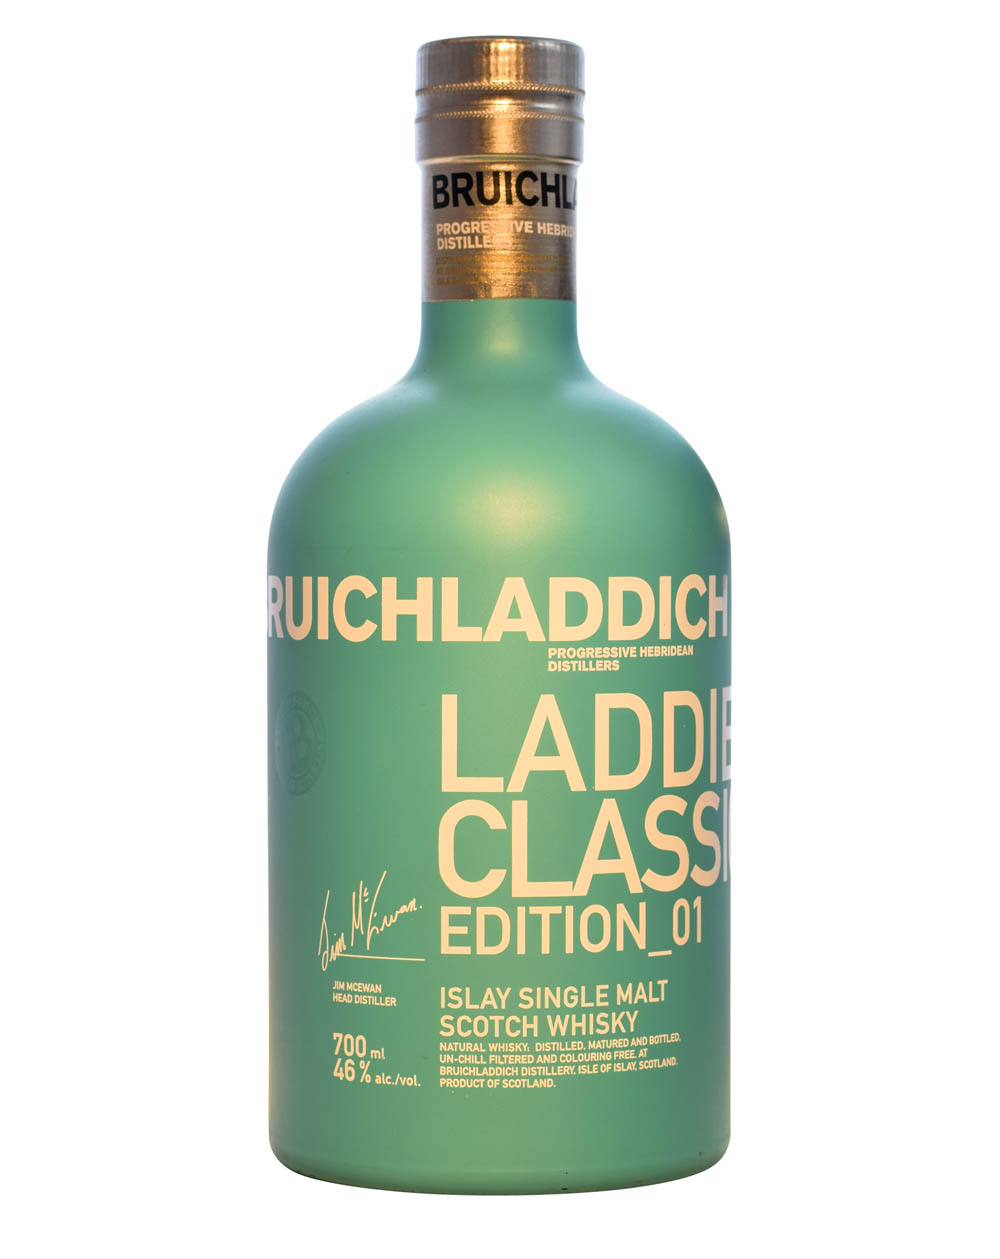 Bruichladdich Laddie Classic Edition 01 Musthave Malts MHM